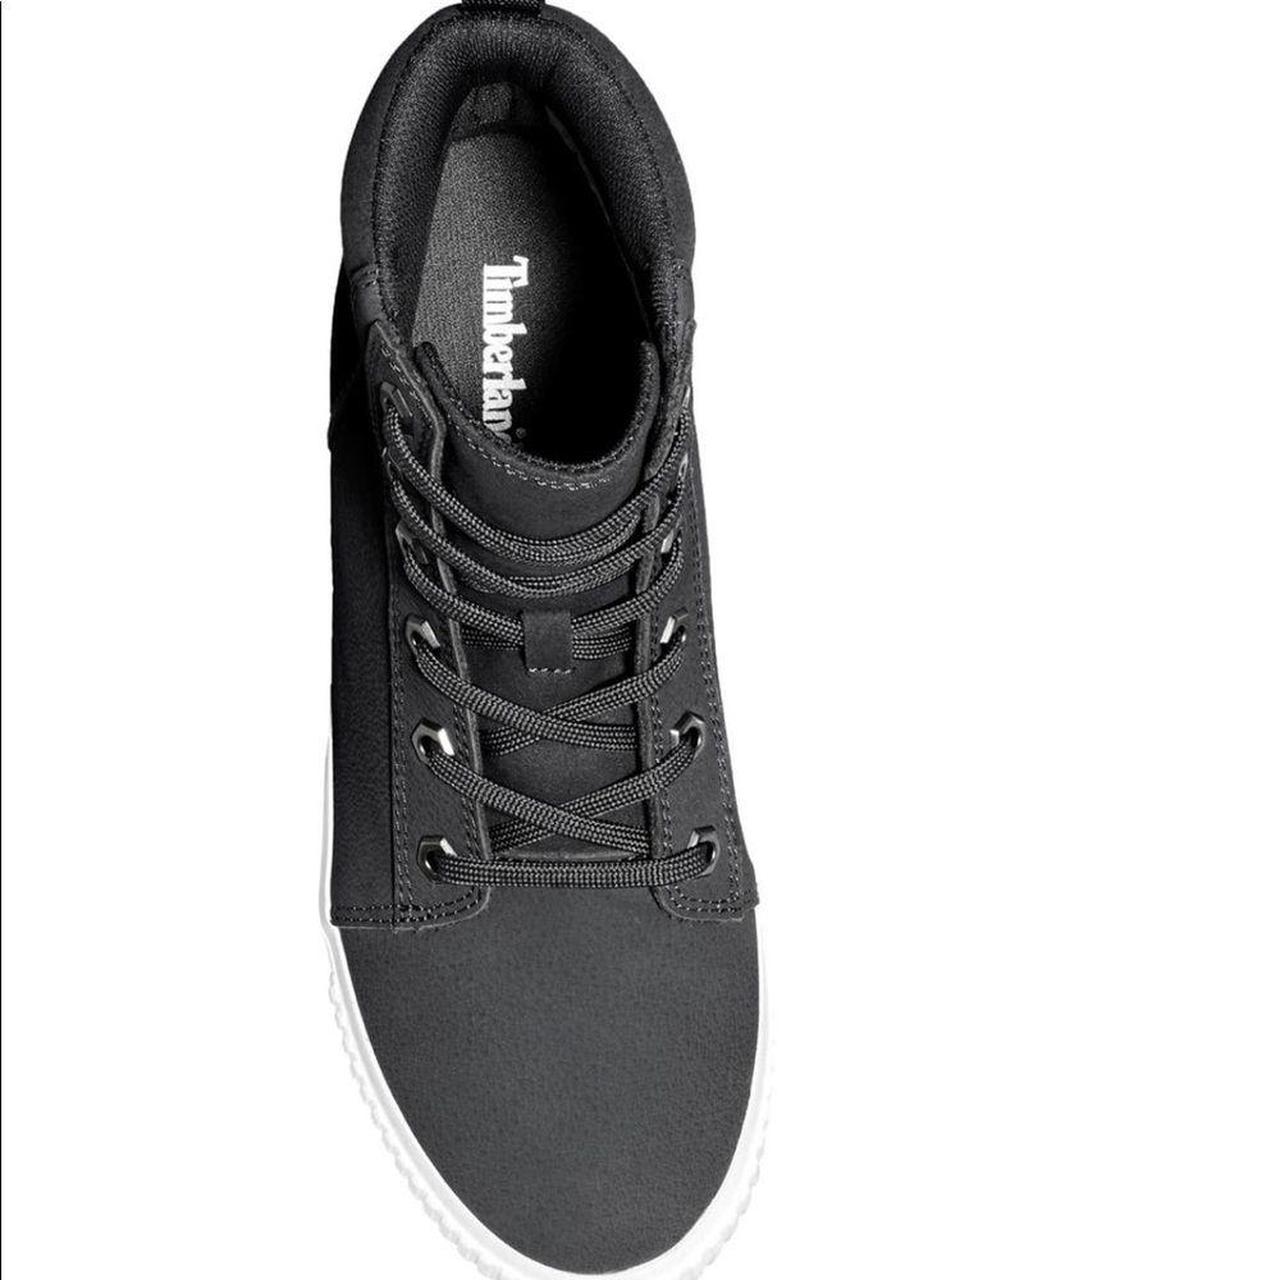 Product Image 3 - TIMBERLAND Skyla Bay Sneaker Boot
Size: